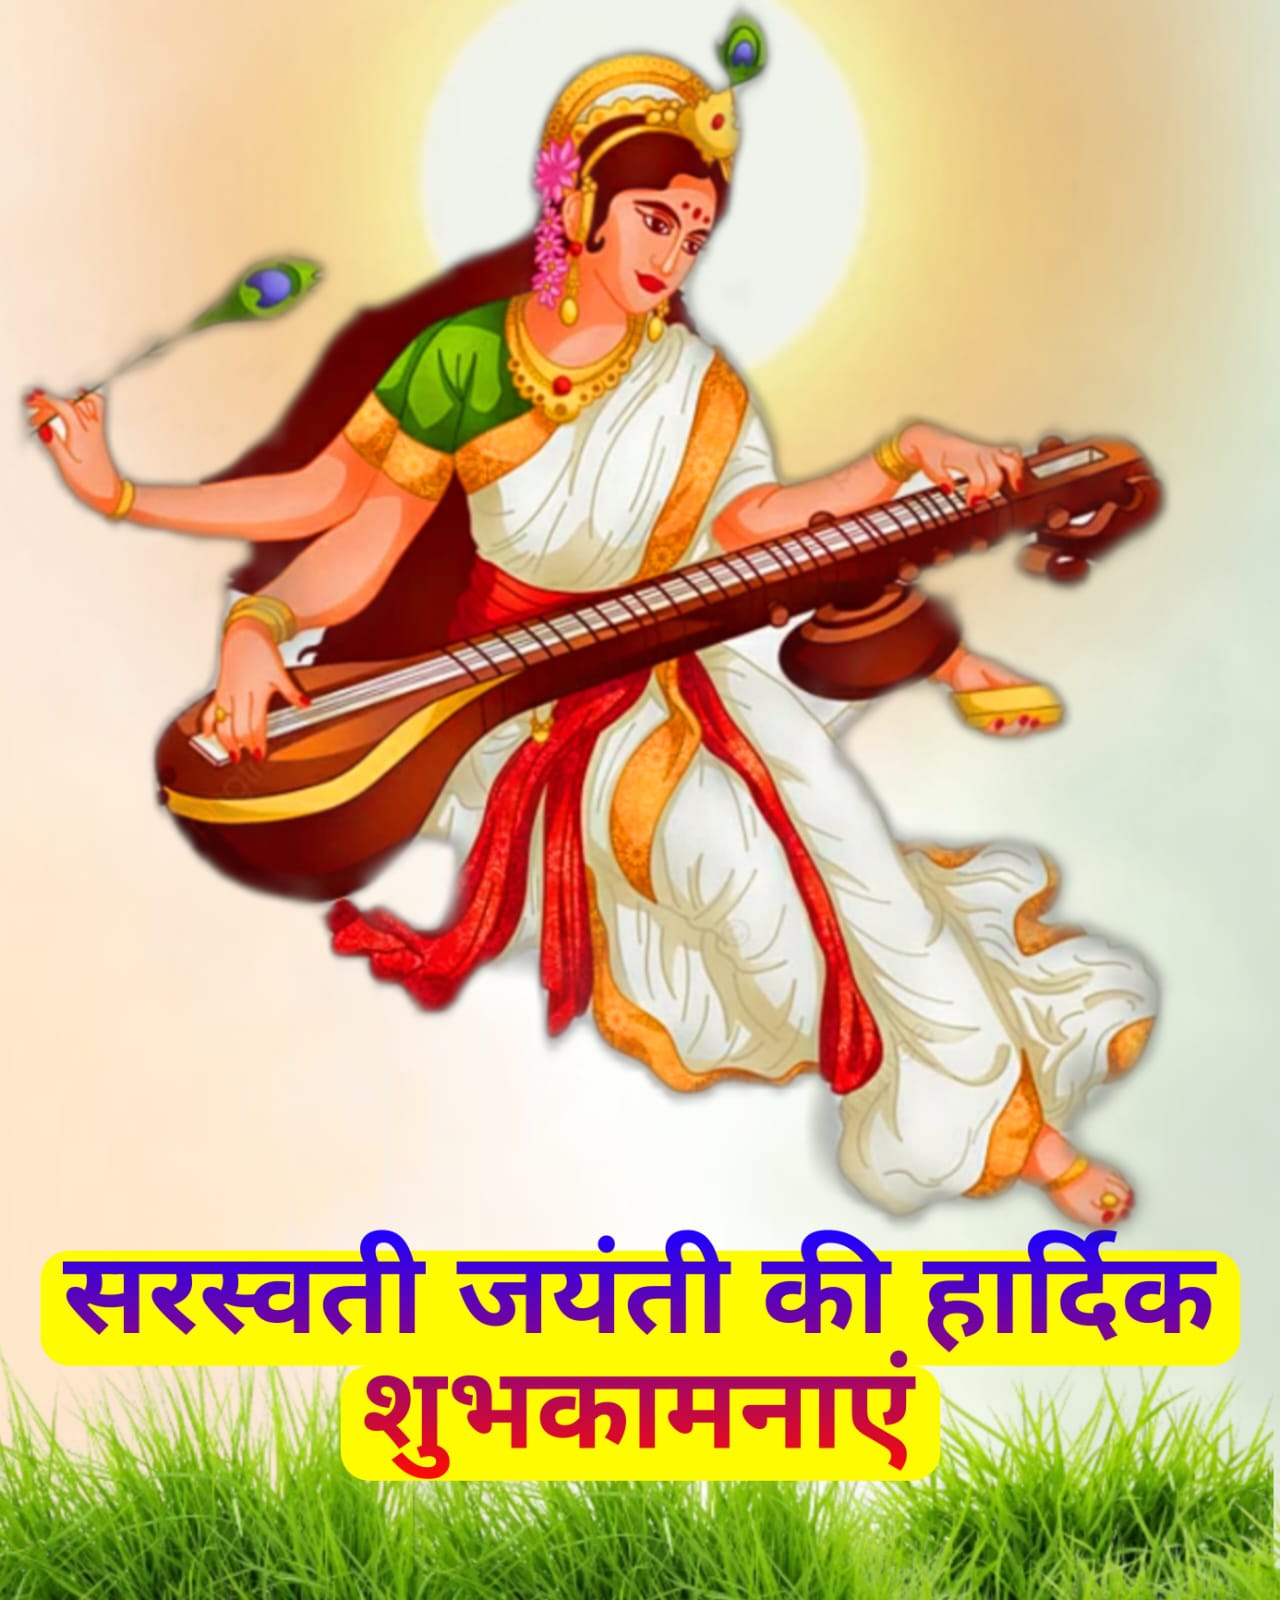 सरस्वती जयंती की हार्दिक शुभकामनाएं | Saraswati Jayanti ki hardik shubhkamnayen images